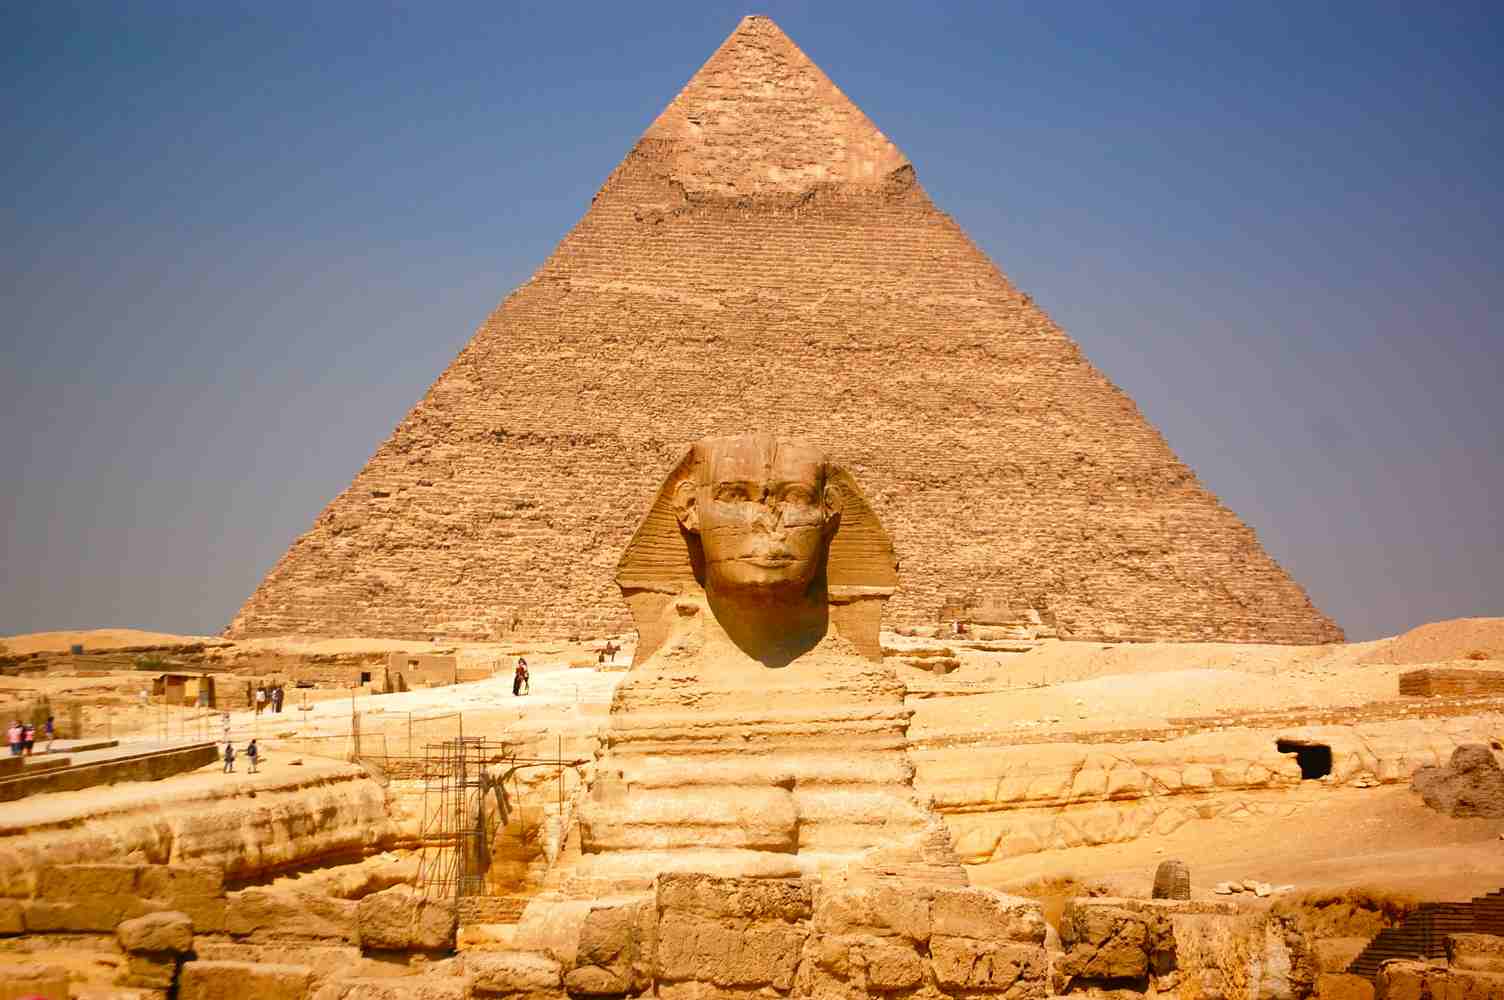 Pyramids of Giza pyramid of Khafre - Pyramids pictures